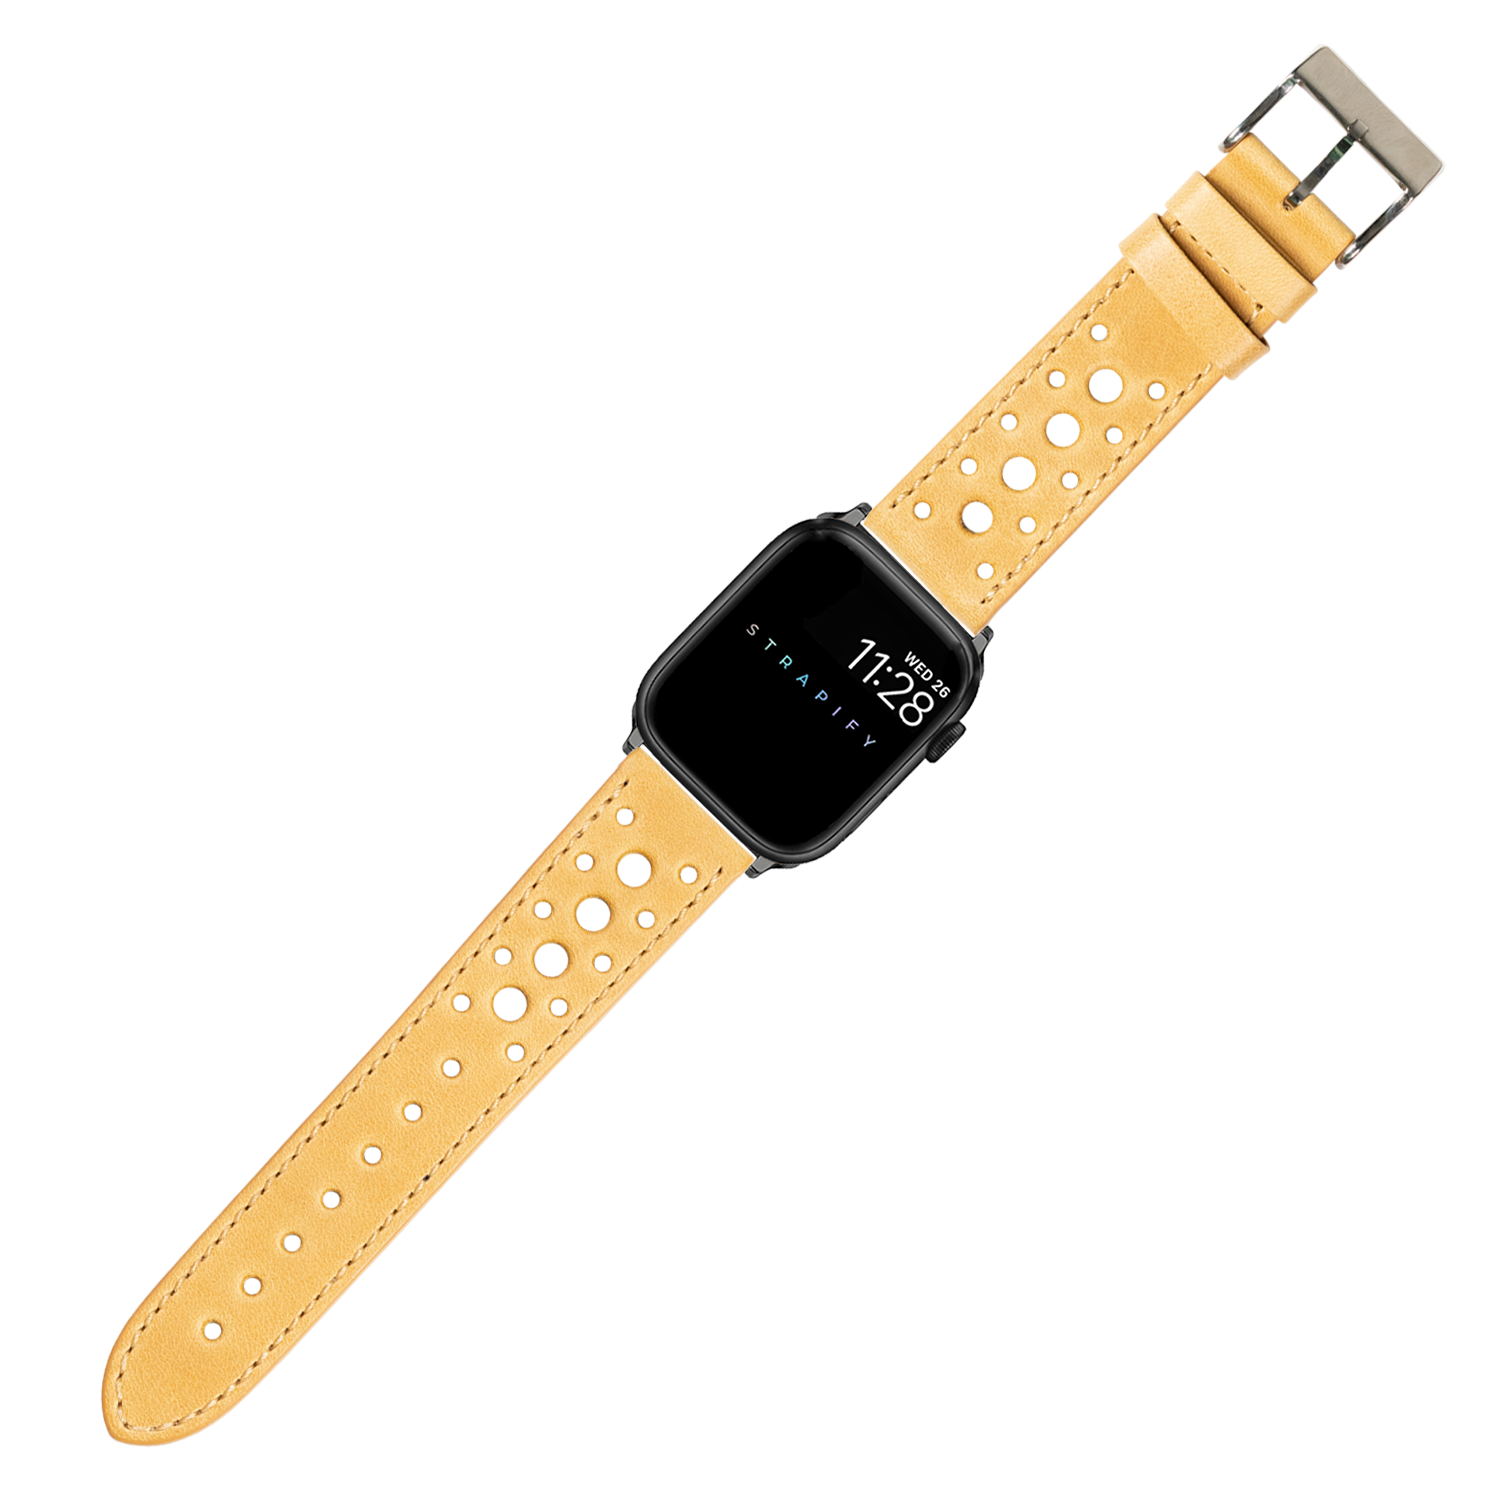 [Apple Watch] Leather - Daytona - Golden Brown